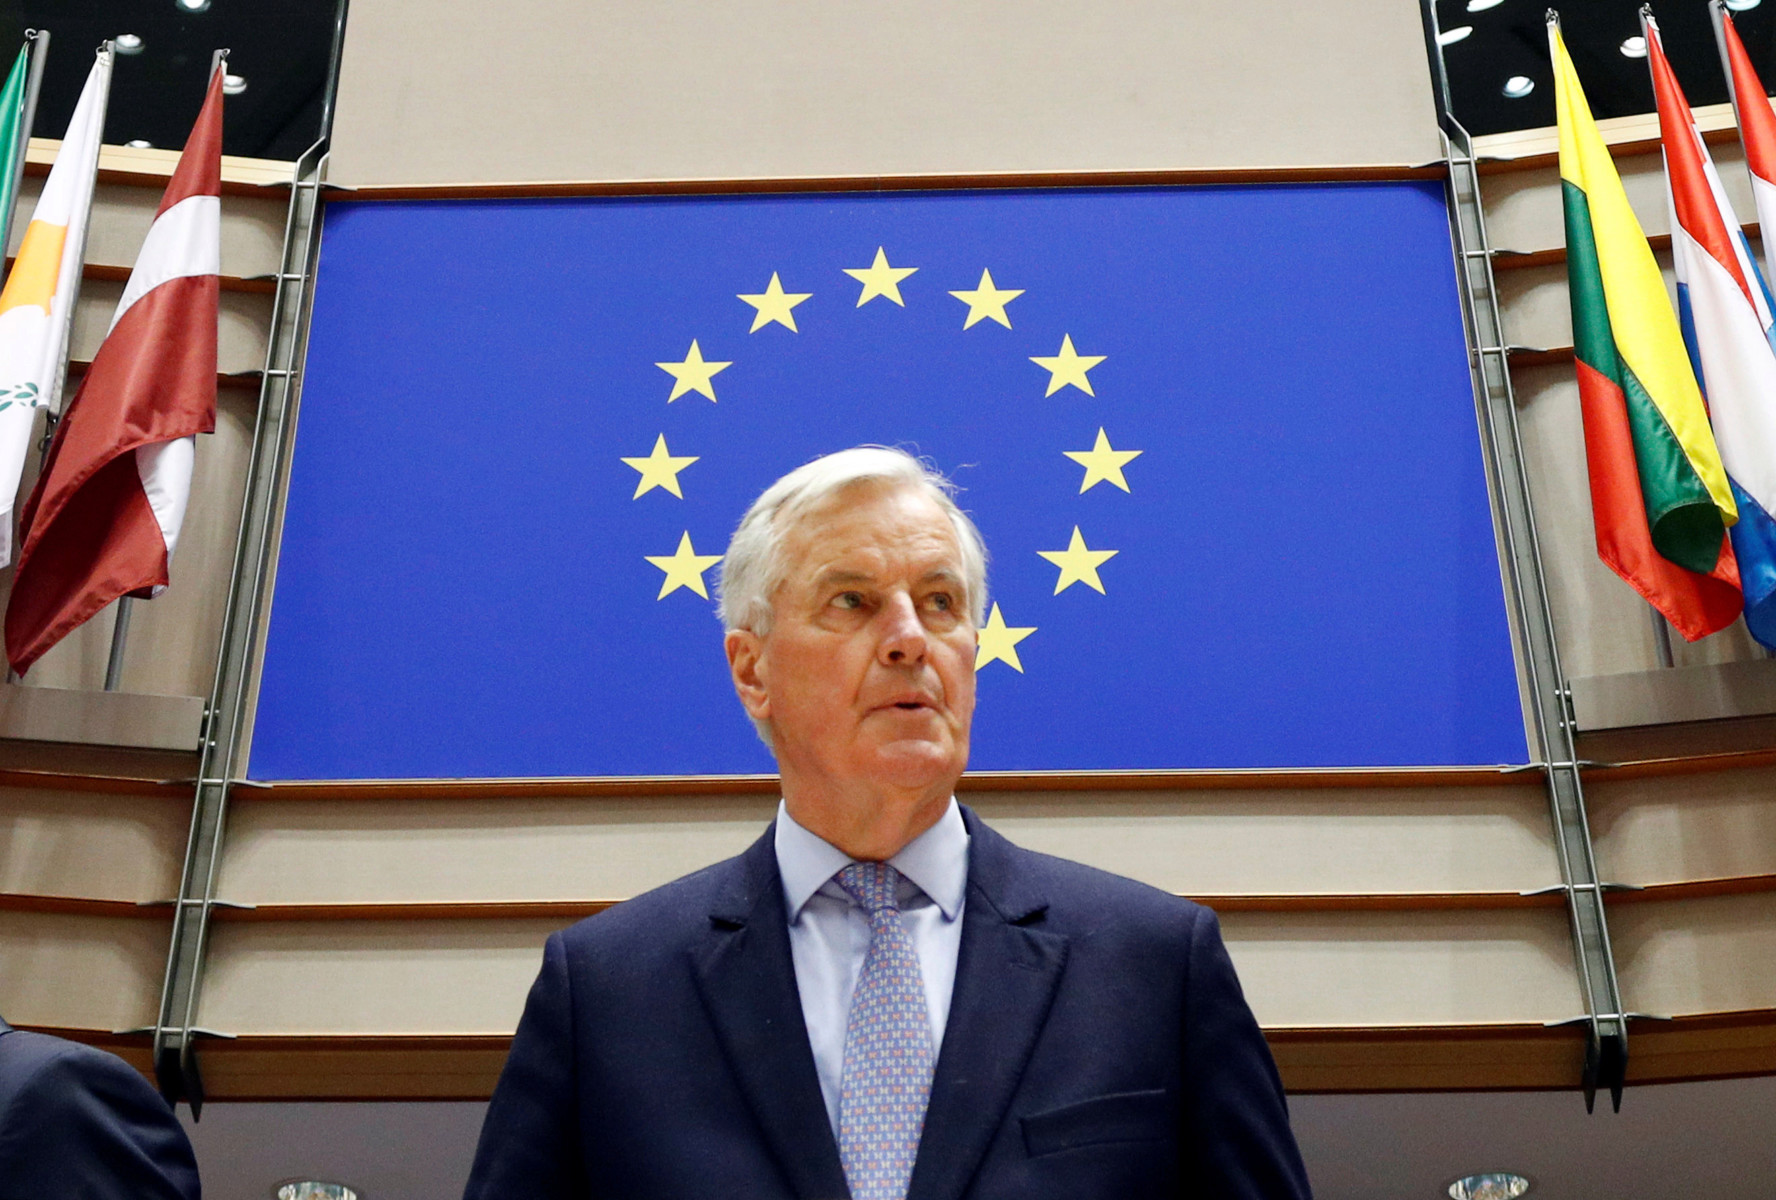 Michel Barnier will lead negotiations for the EU on the Brexit trade talks